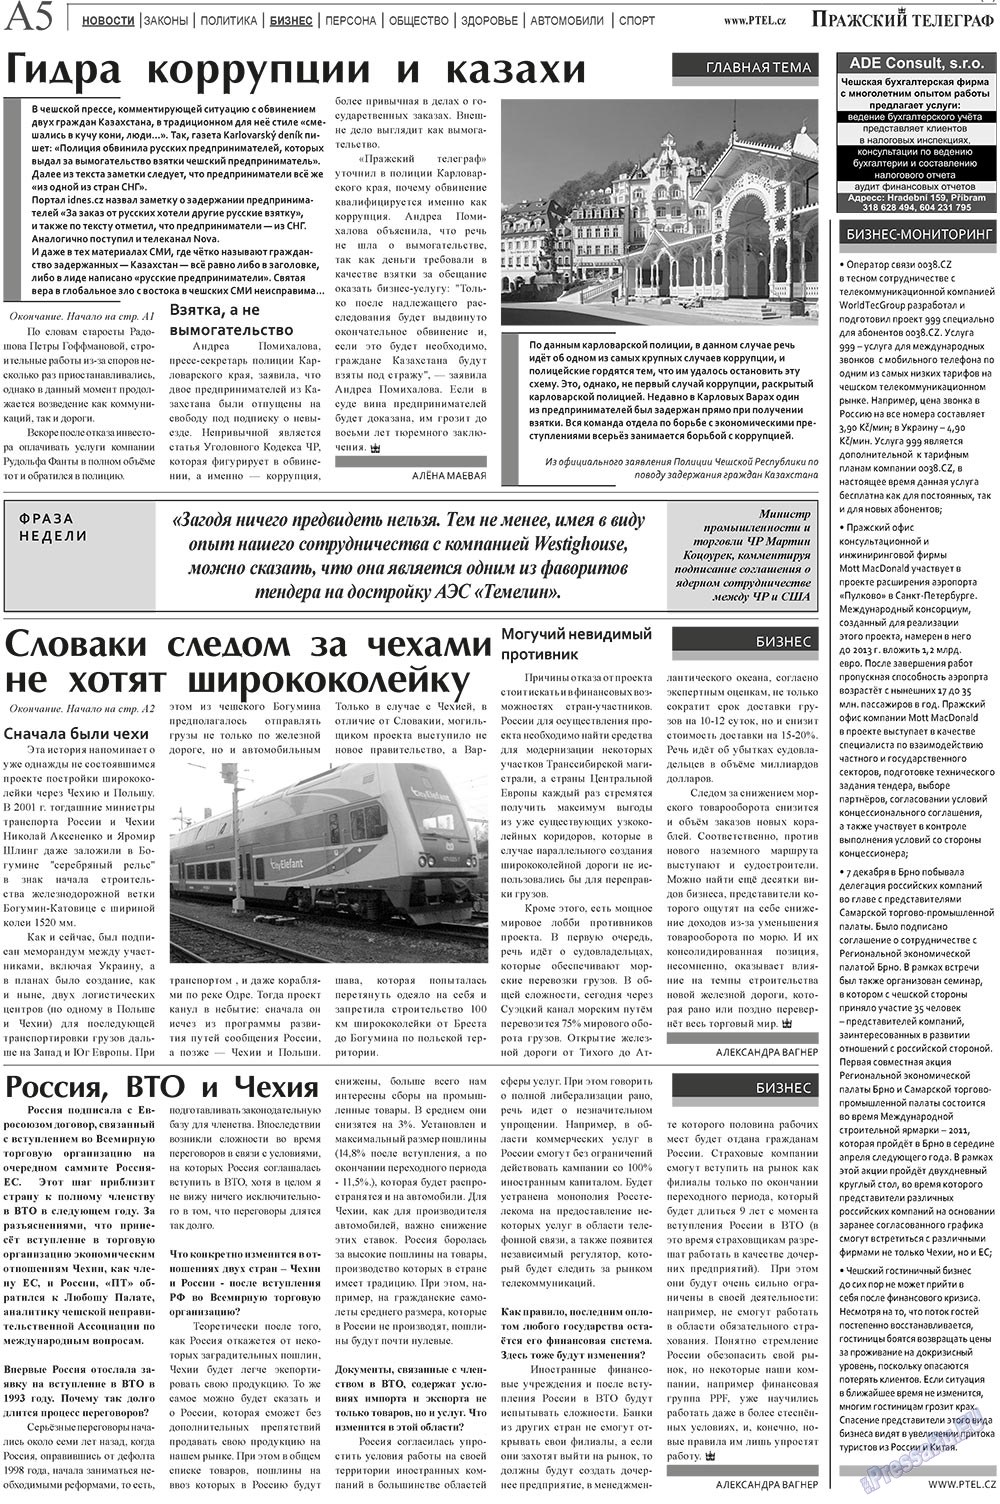 Пражский телеграф, газета. 2010 №49 стр.5